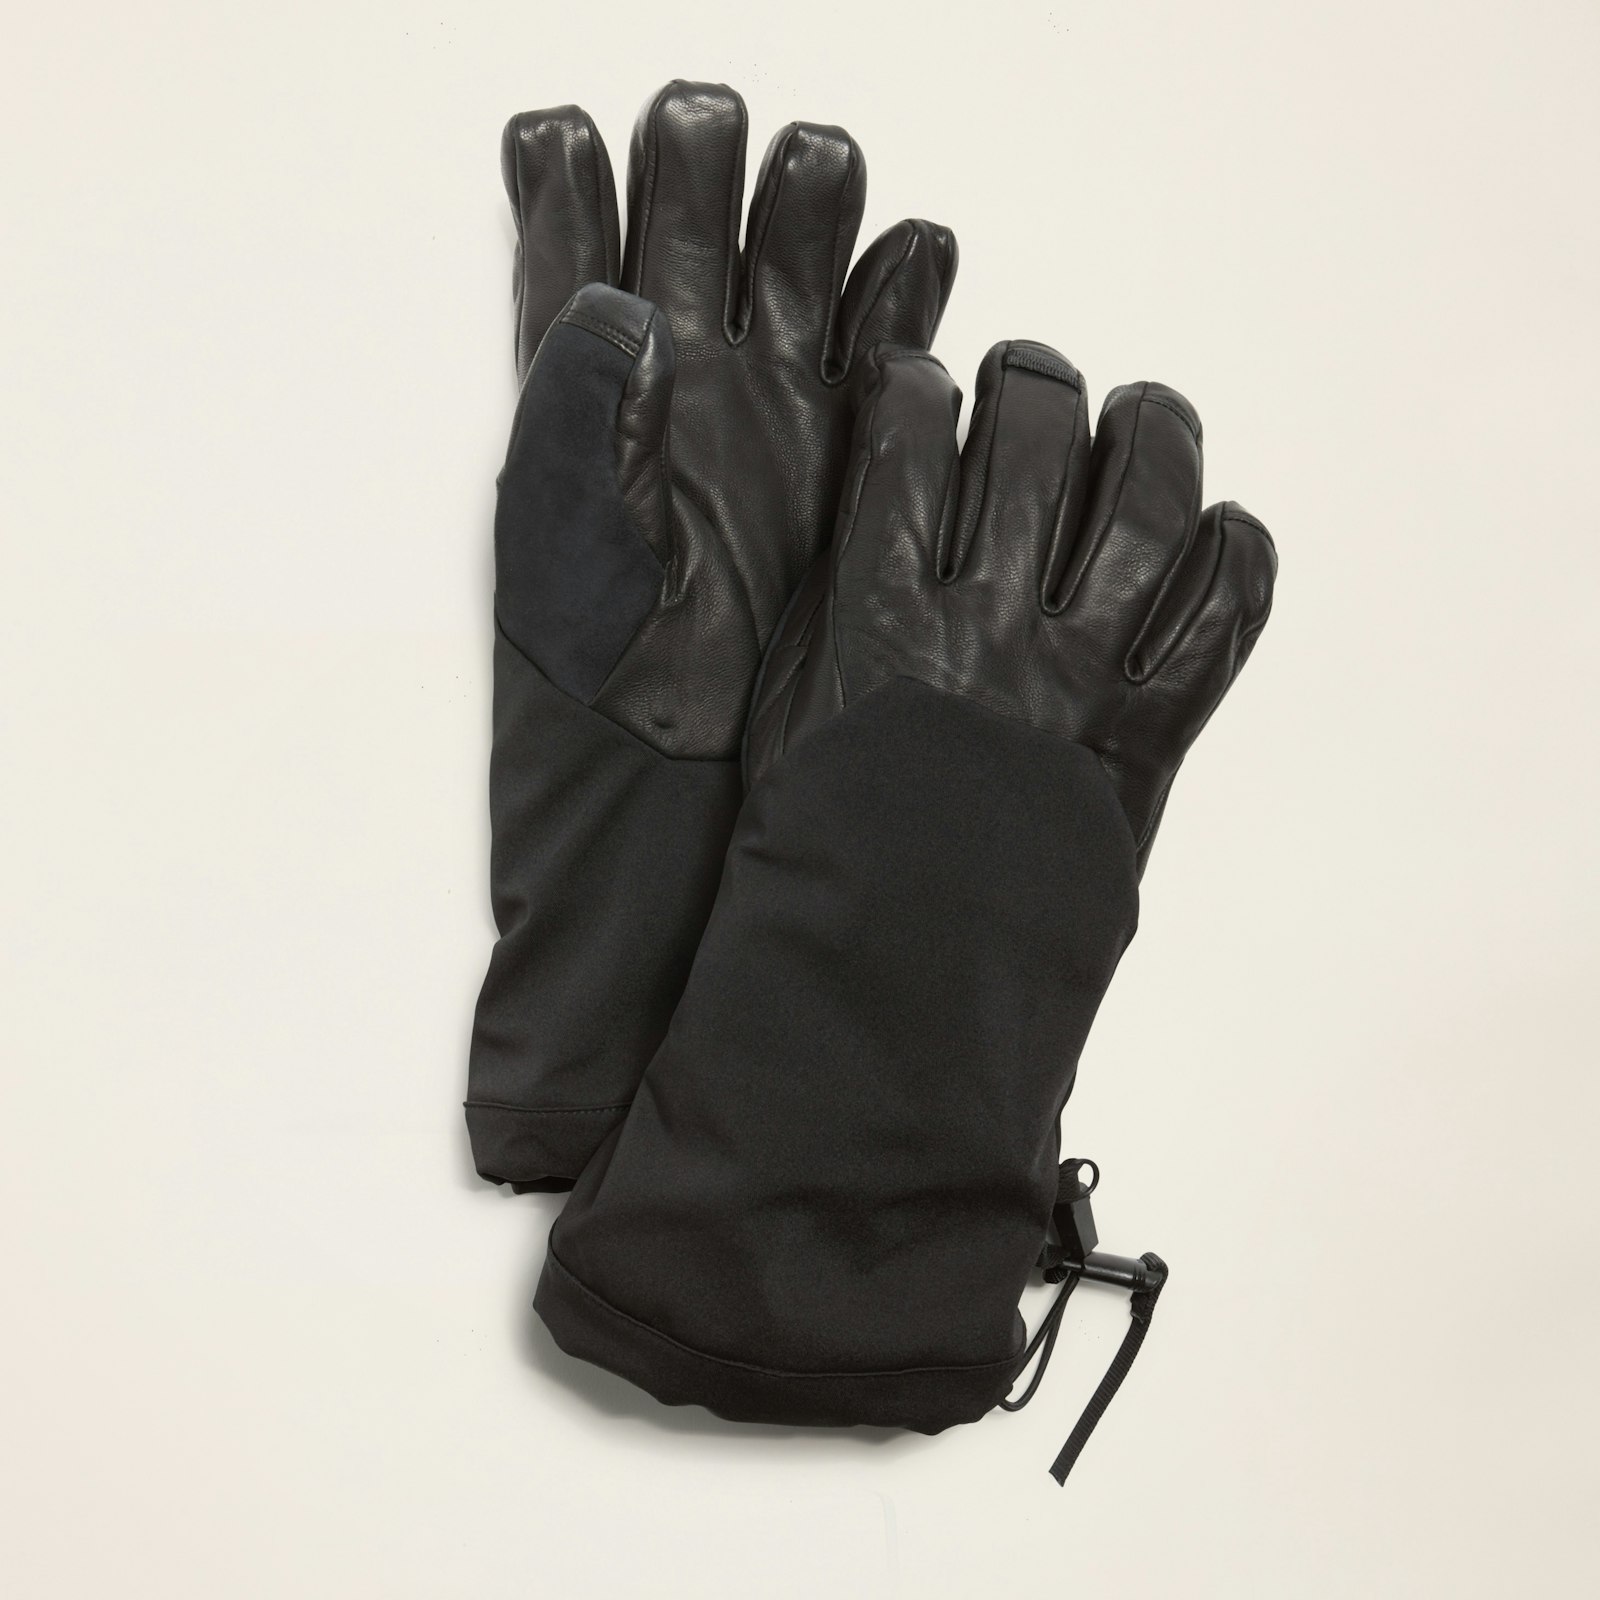 Men's Midmountain Ski Gloves